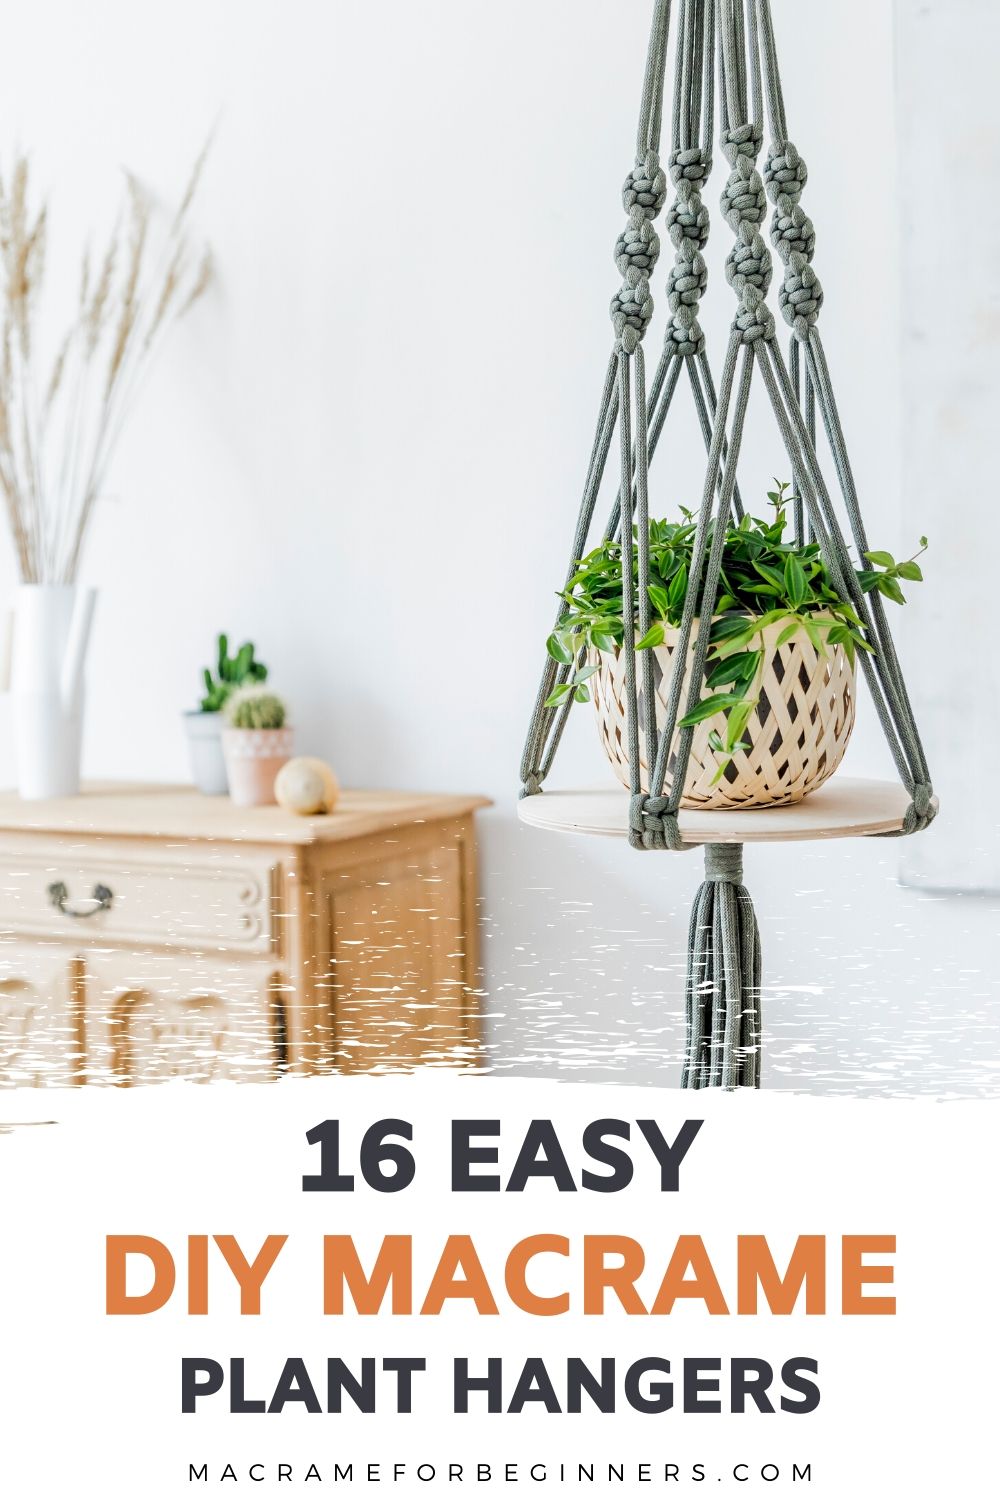 16 Easy DIY Macrame Plant Hangers for Beginners - Macrame for Beginners